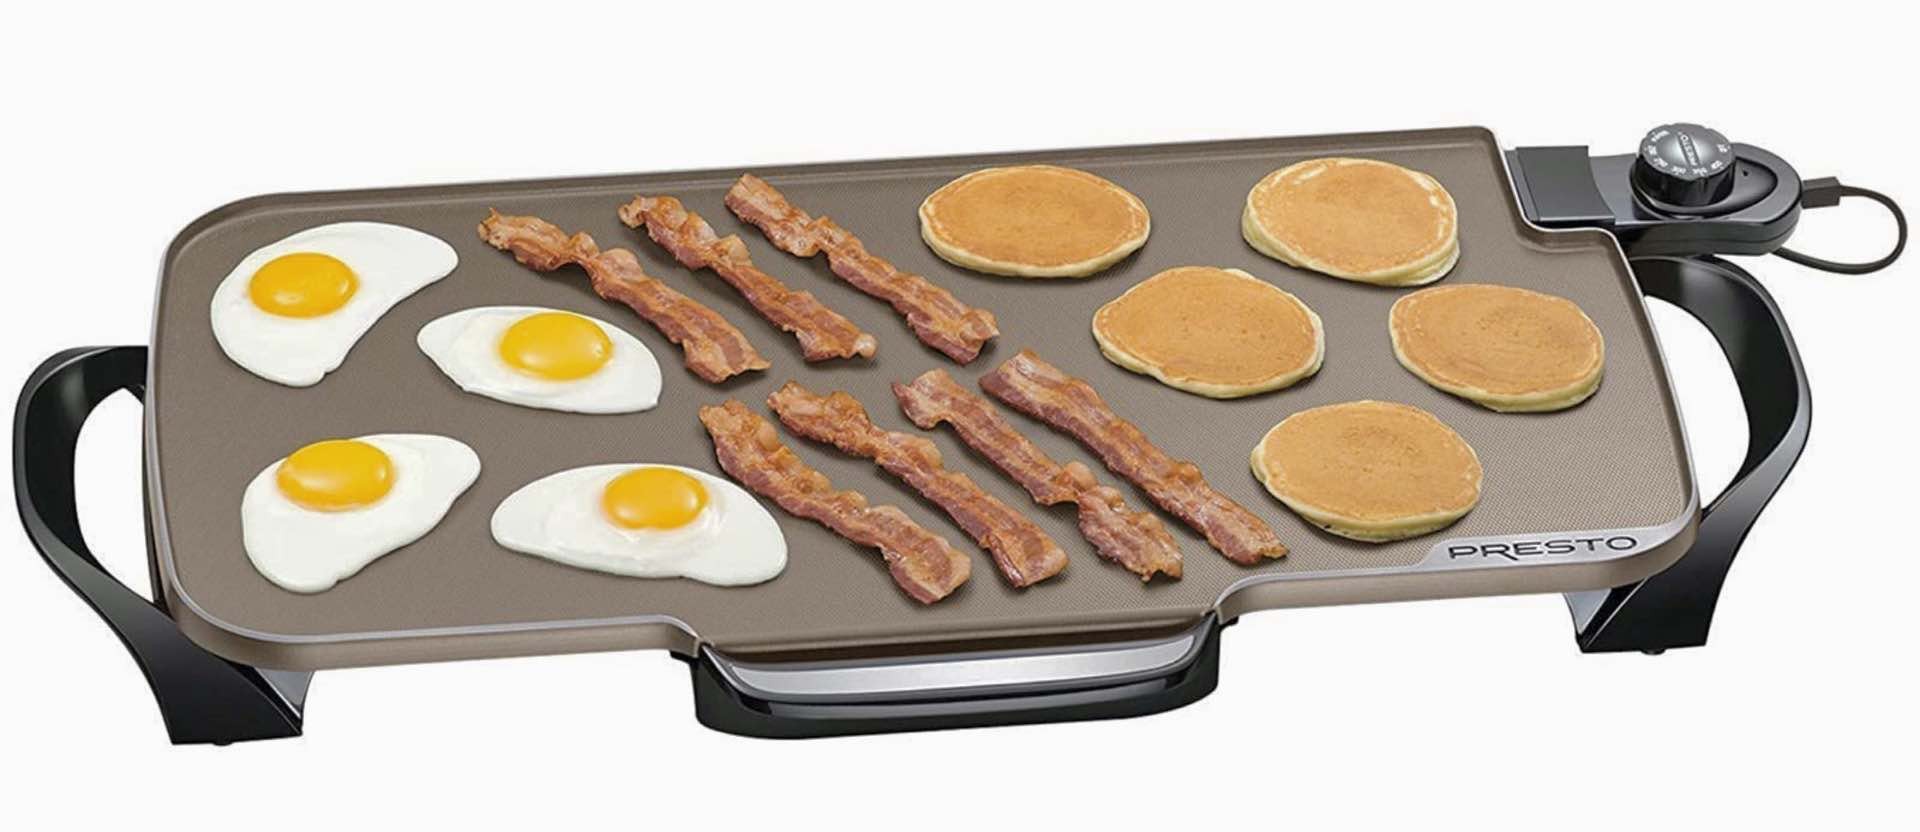 presto-22-inch-ceramic-electric-griddle-pancake-breakfast